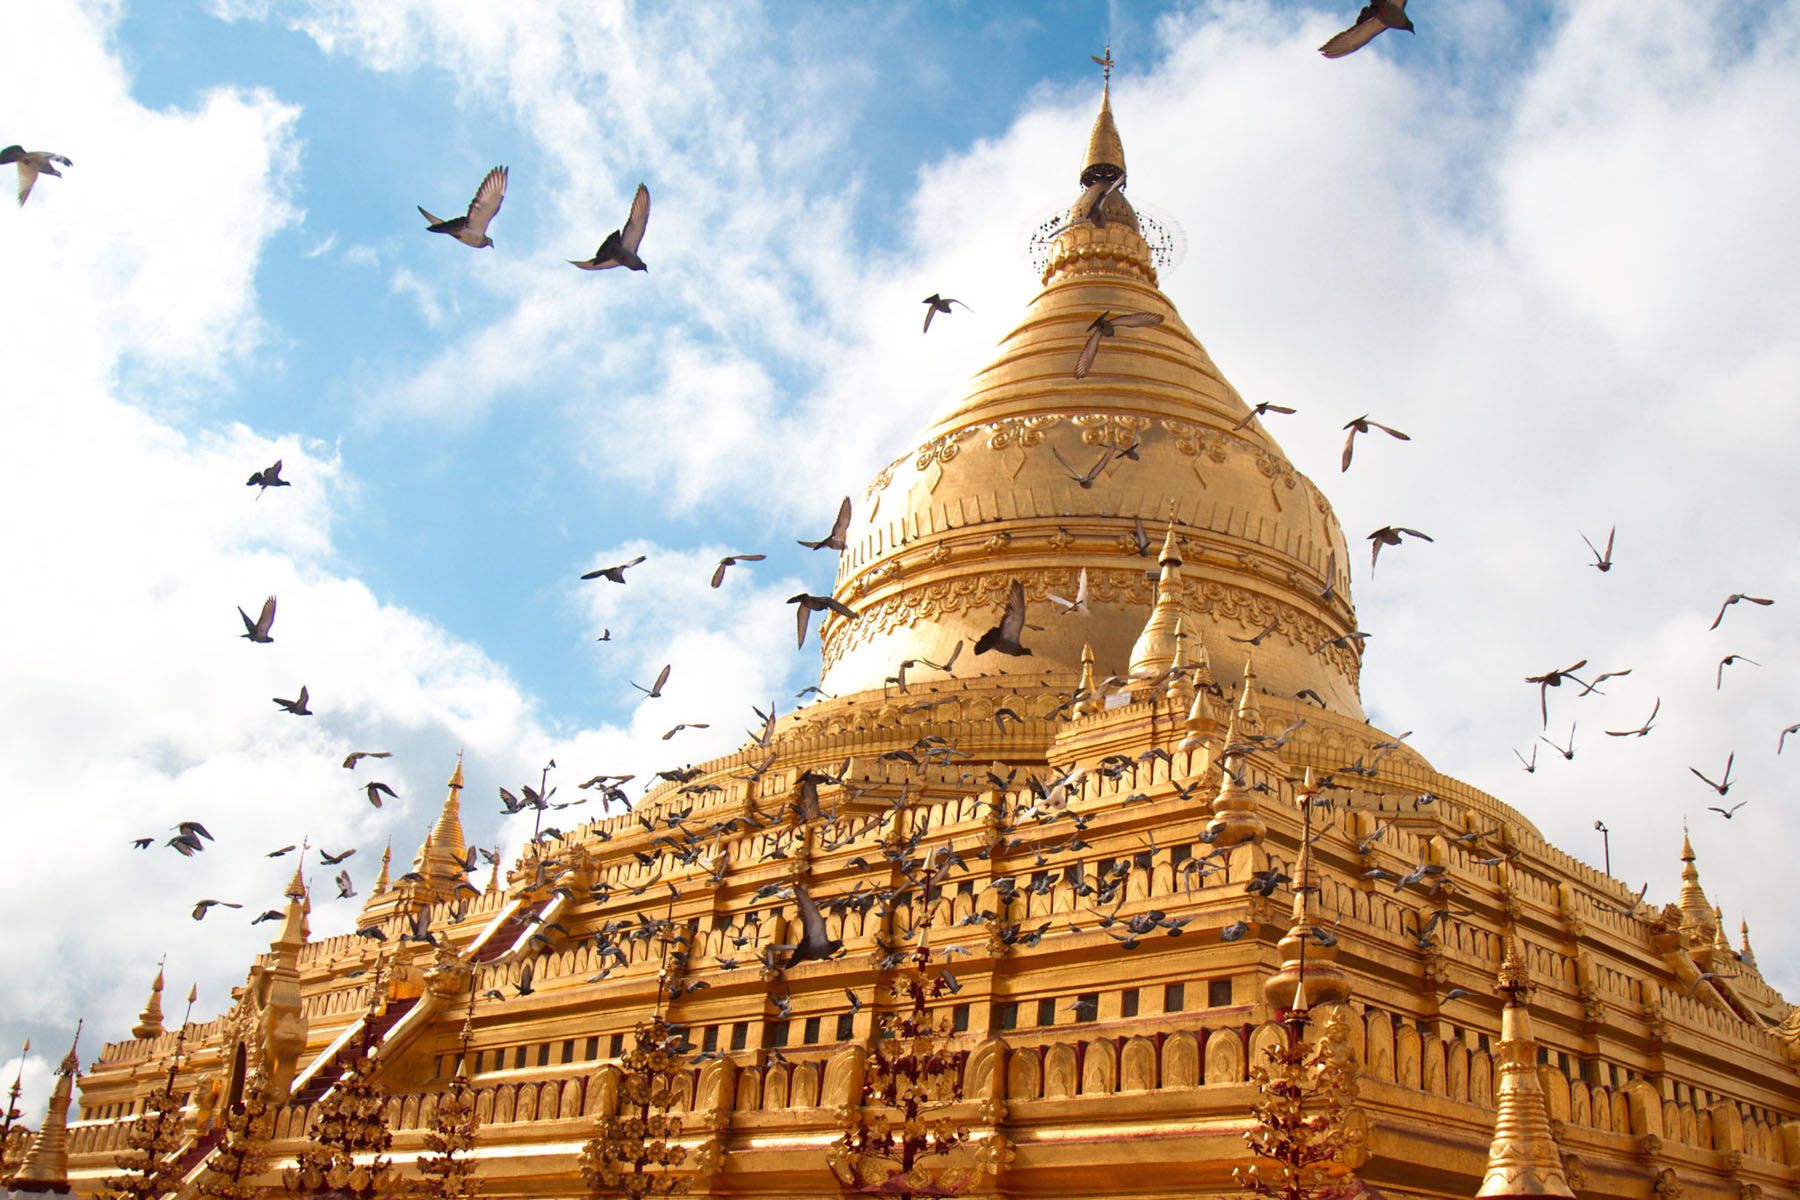 Tour du lịch Myanmar Tâm linh 2022/2023 189362